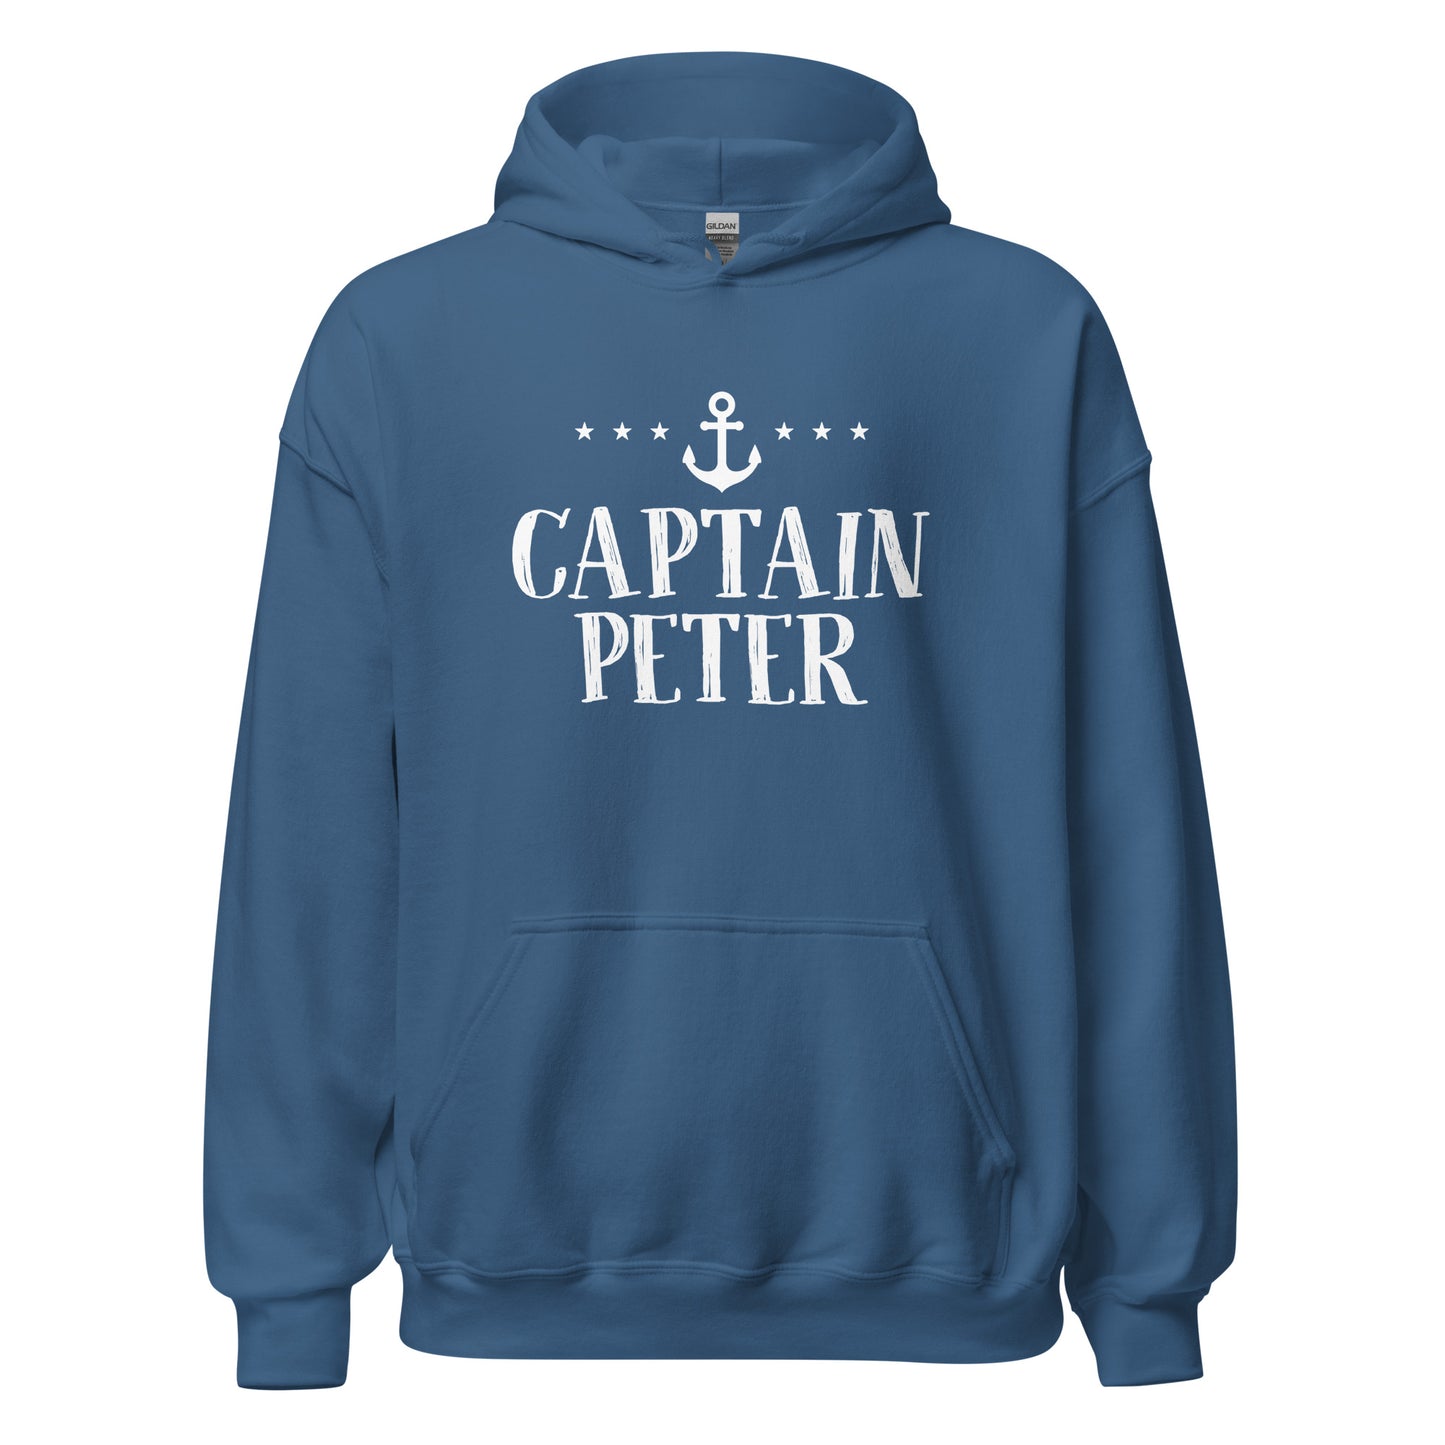 Personalized Boat Captain Unisex Hoodie Sweatshirt